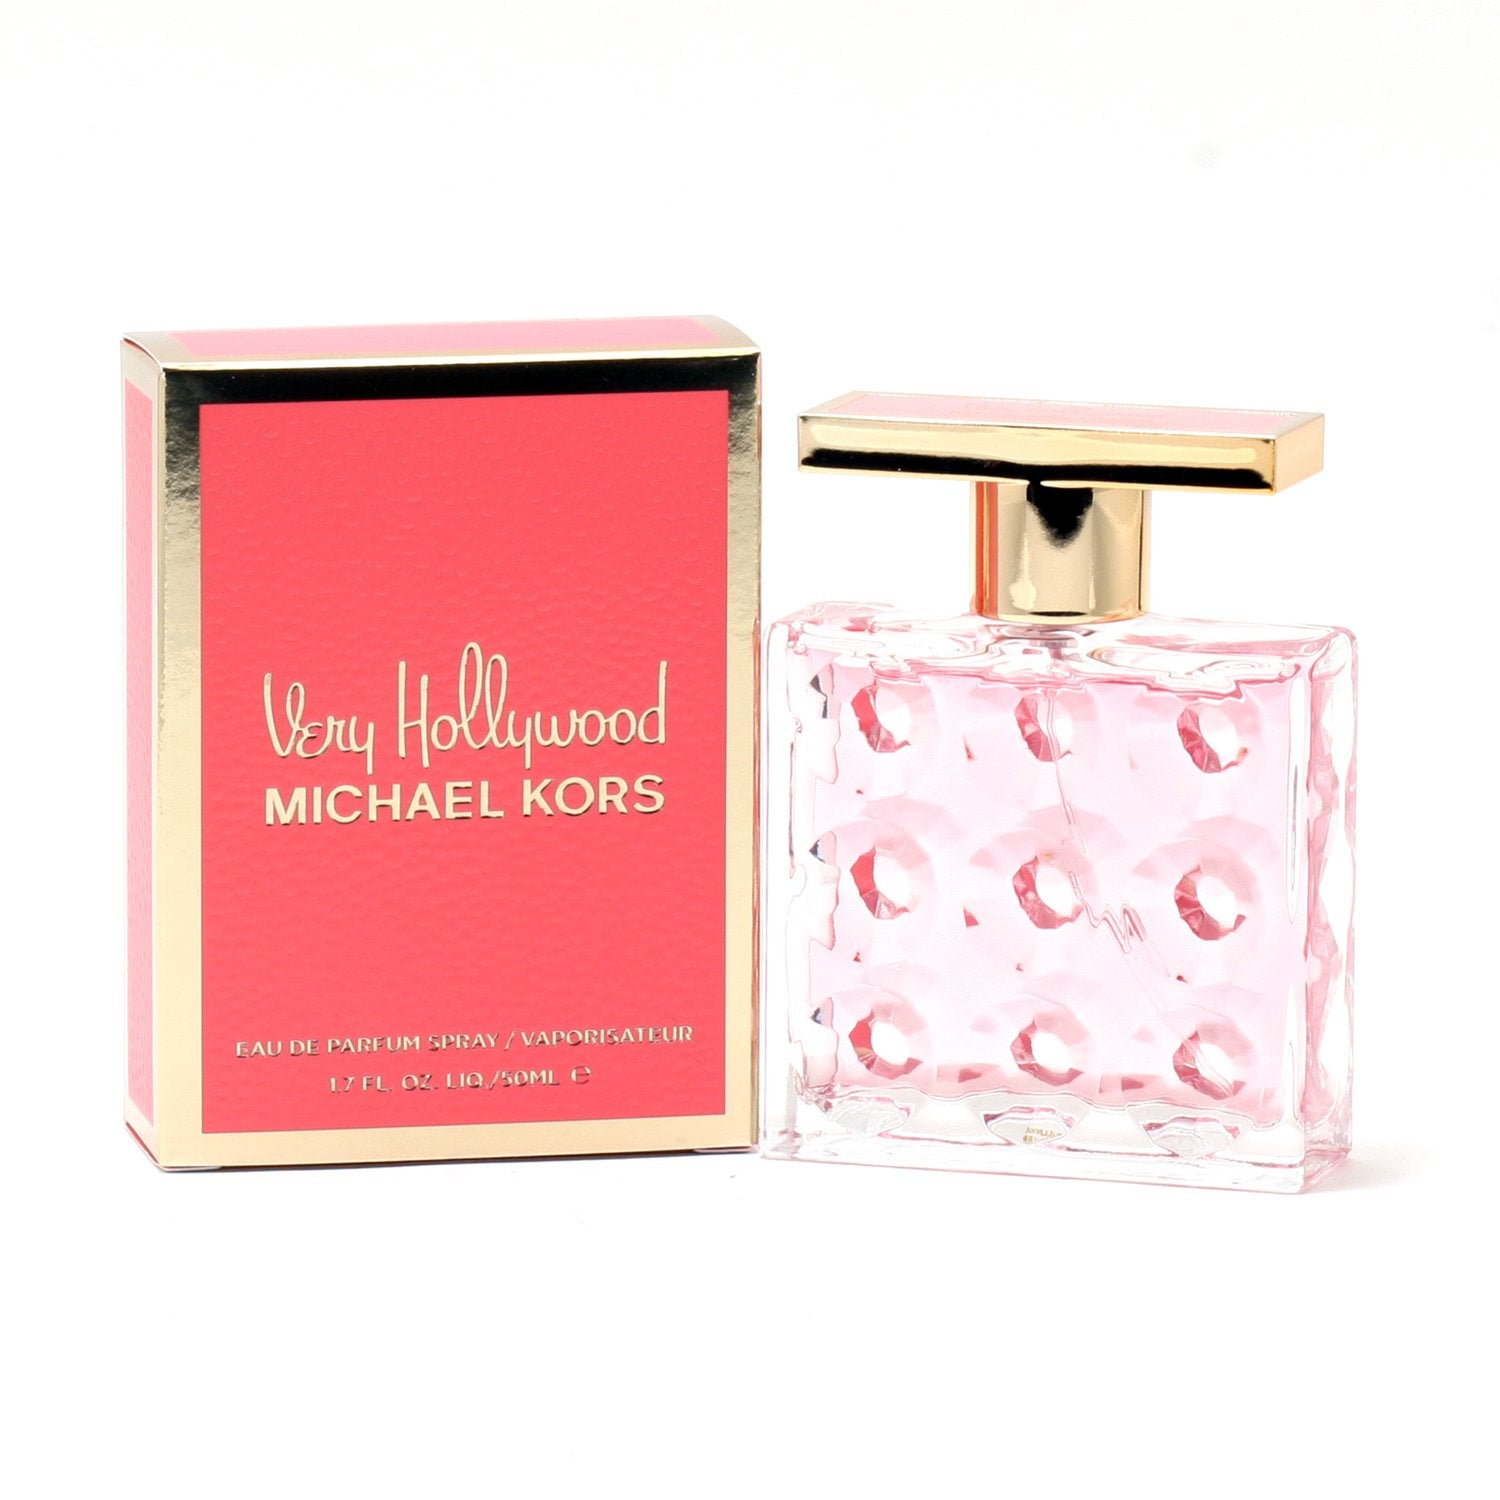 Perfume - MICHAEL KORS VERY HOLLYWOOD FOR WOMEN - EAU DE PARFUM SPRAY, 1.7 OZ